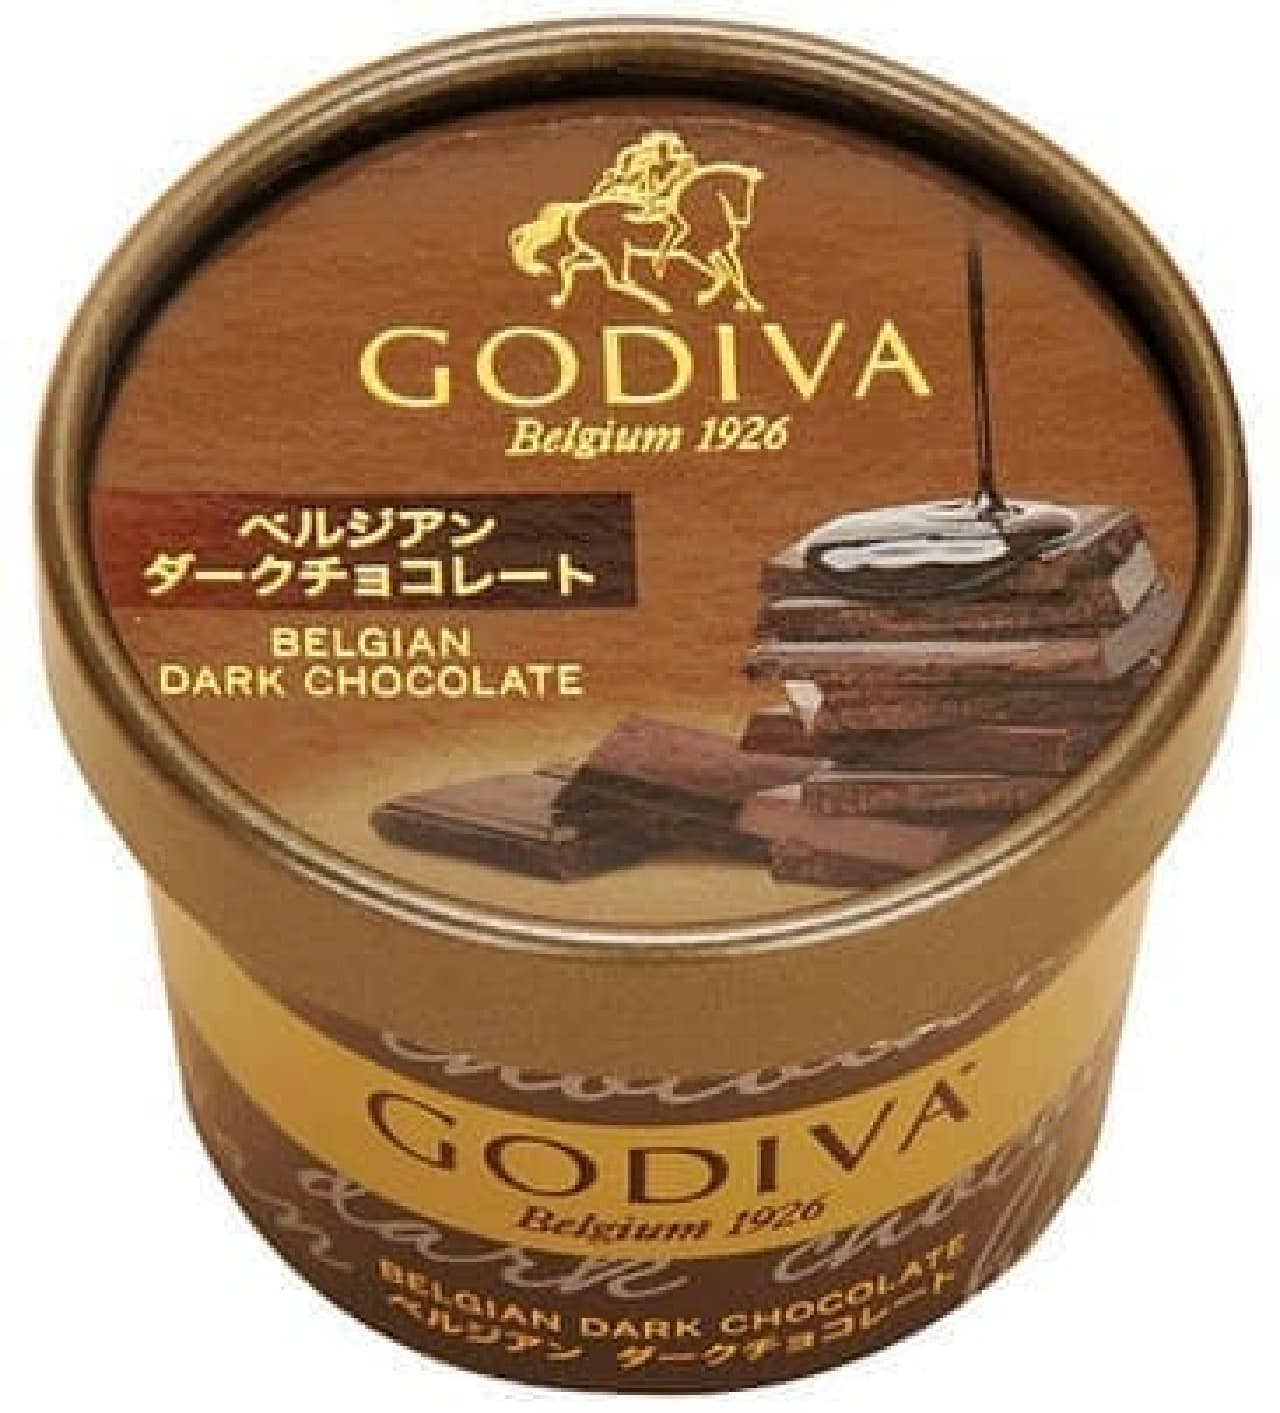 FamilyMart "GODIVA Cup Ice Belgian Dark Chocolate"